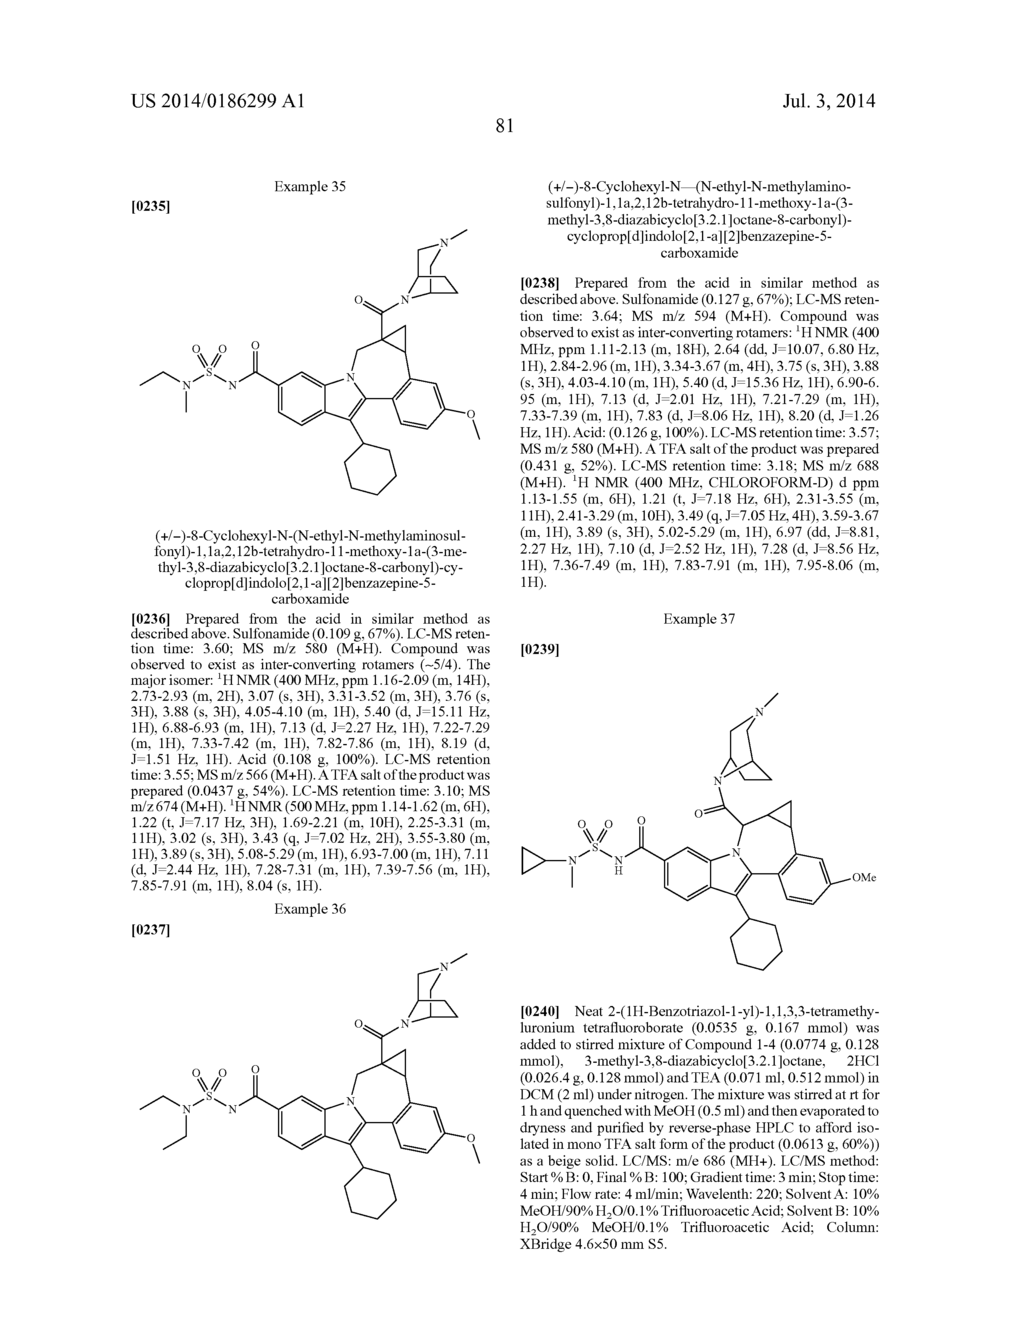 Cyclopropyl Fused Indolobenzazepine HCV NS5B Inhibitors - diagram, schematic, and image 82